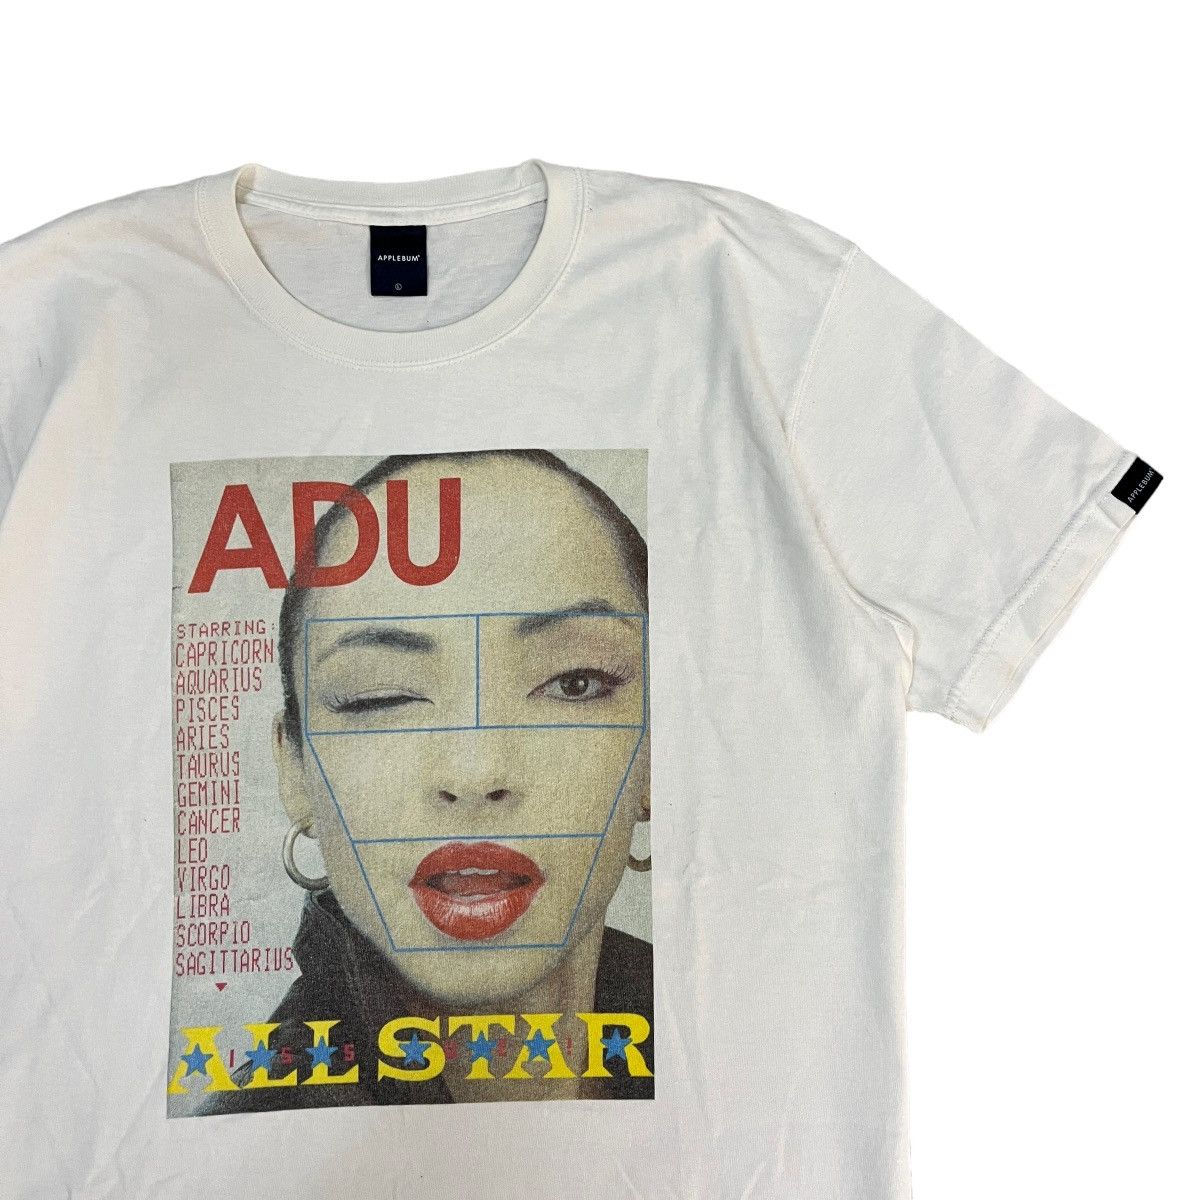 Japanese Brand - Sade Adu All Star Issue by Applebum Japan - 1